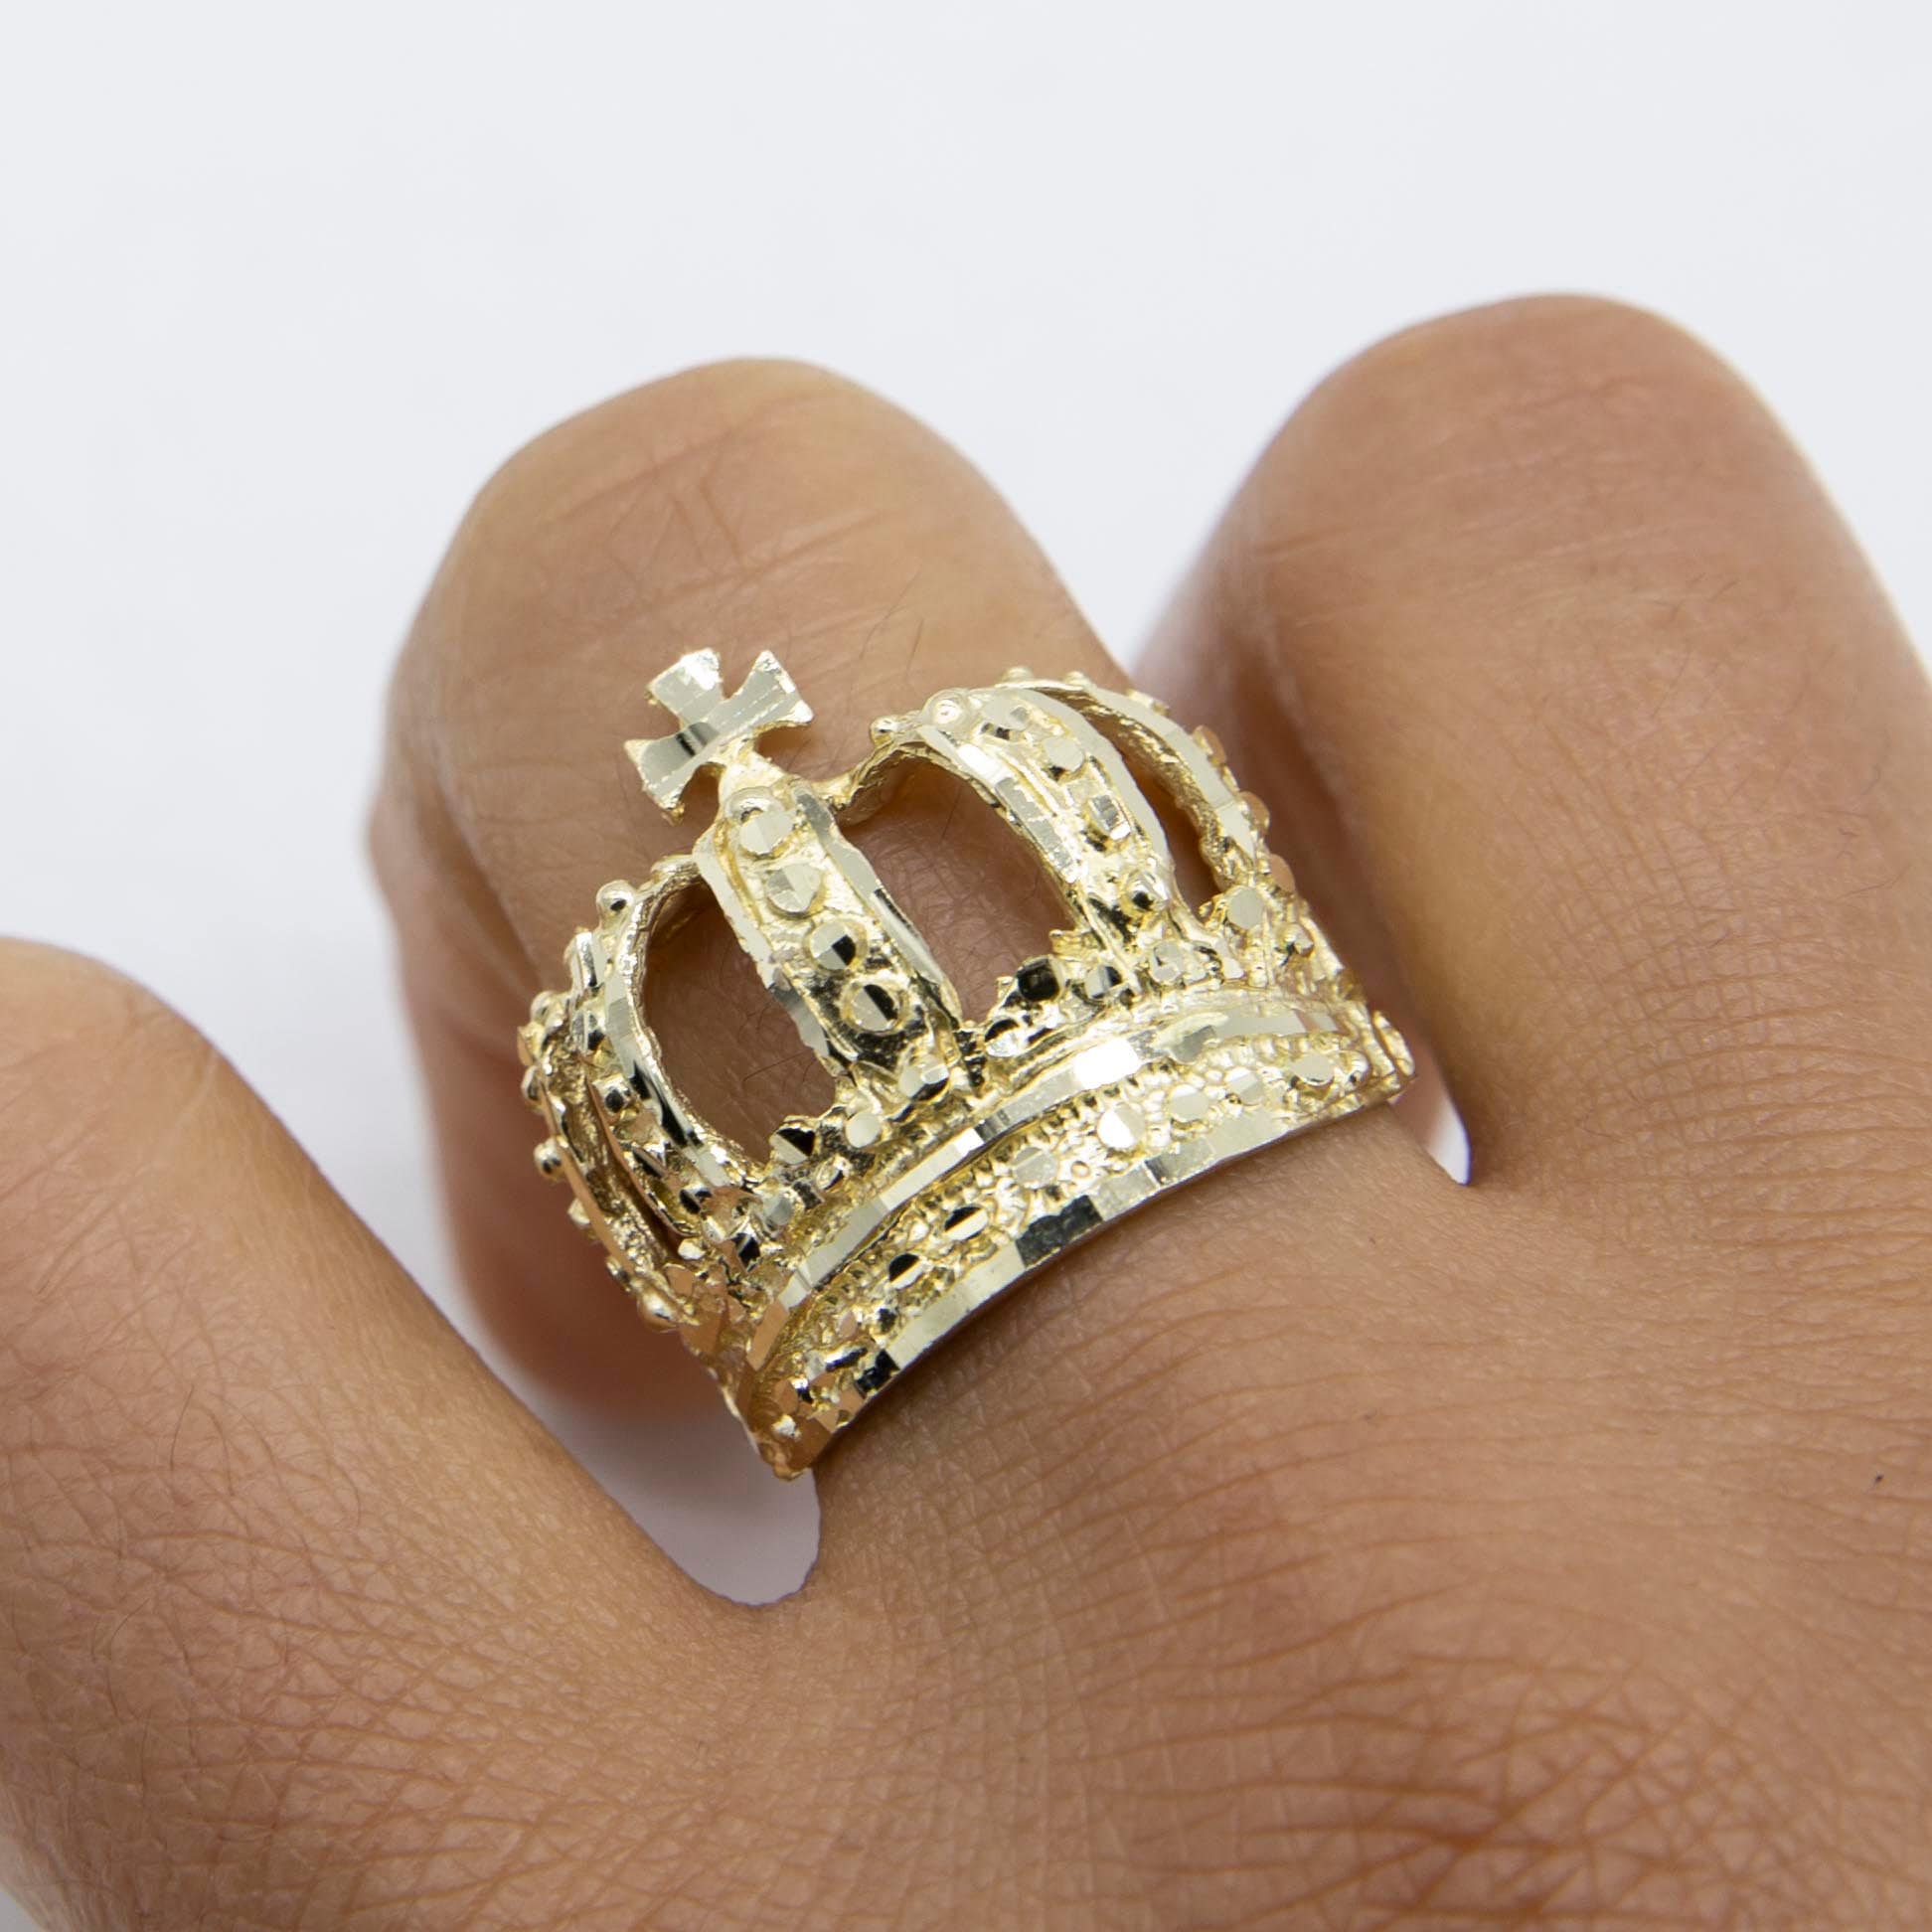 SUPER SALE‼️‼️1金crown ring real goldカラーゴールド